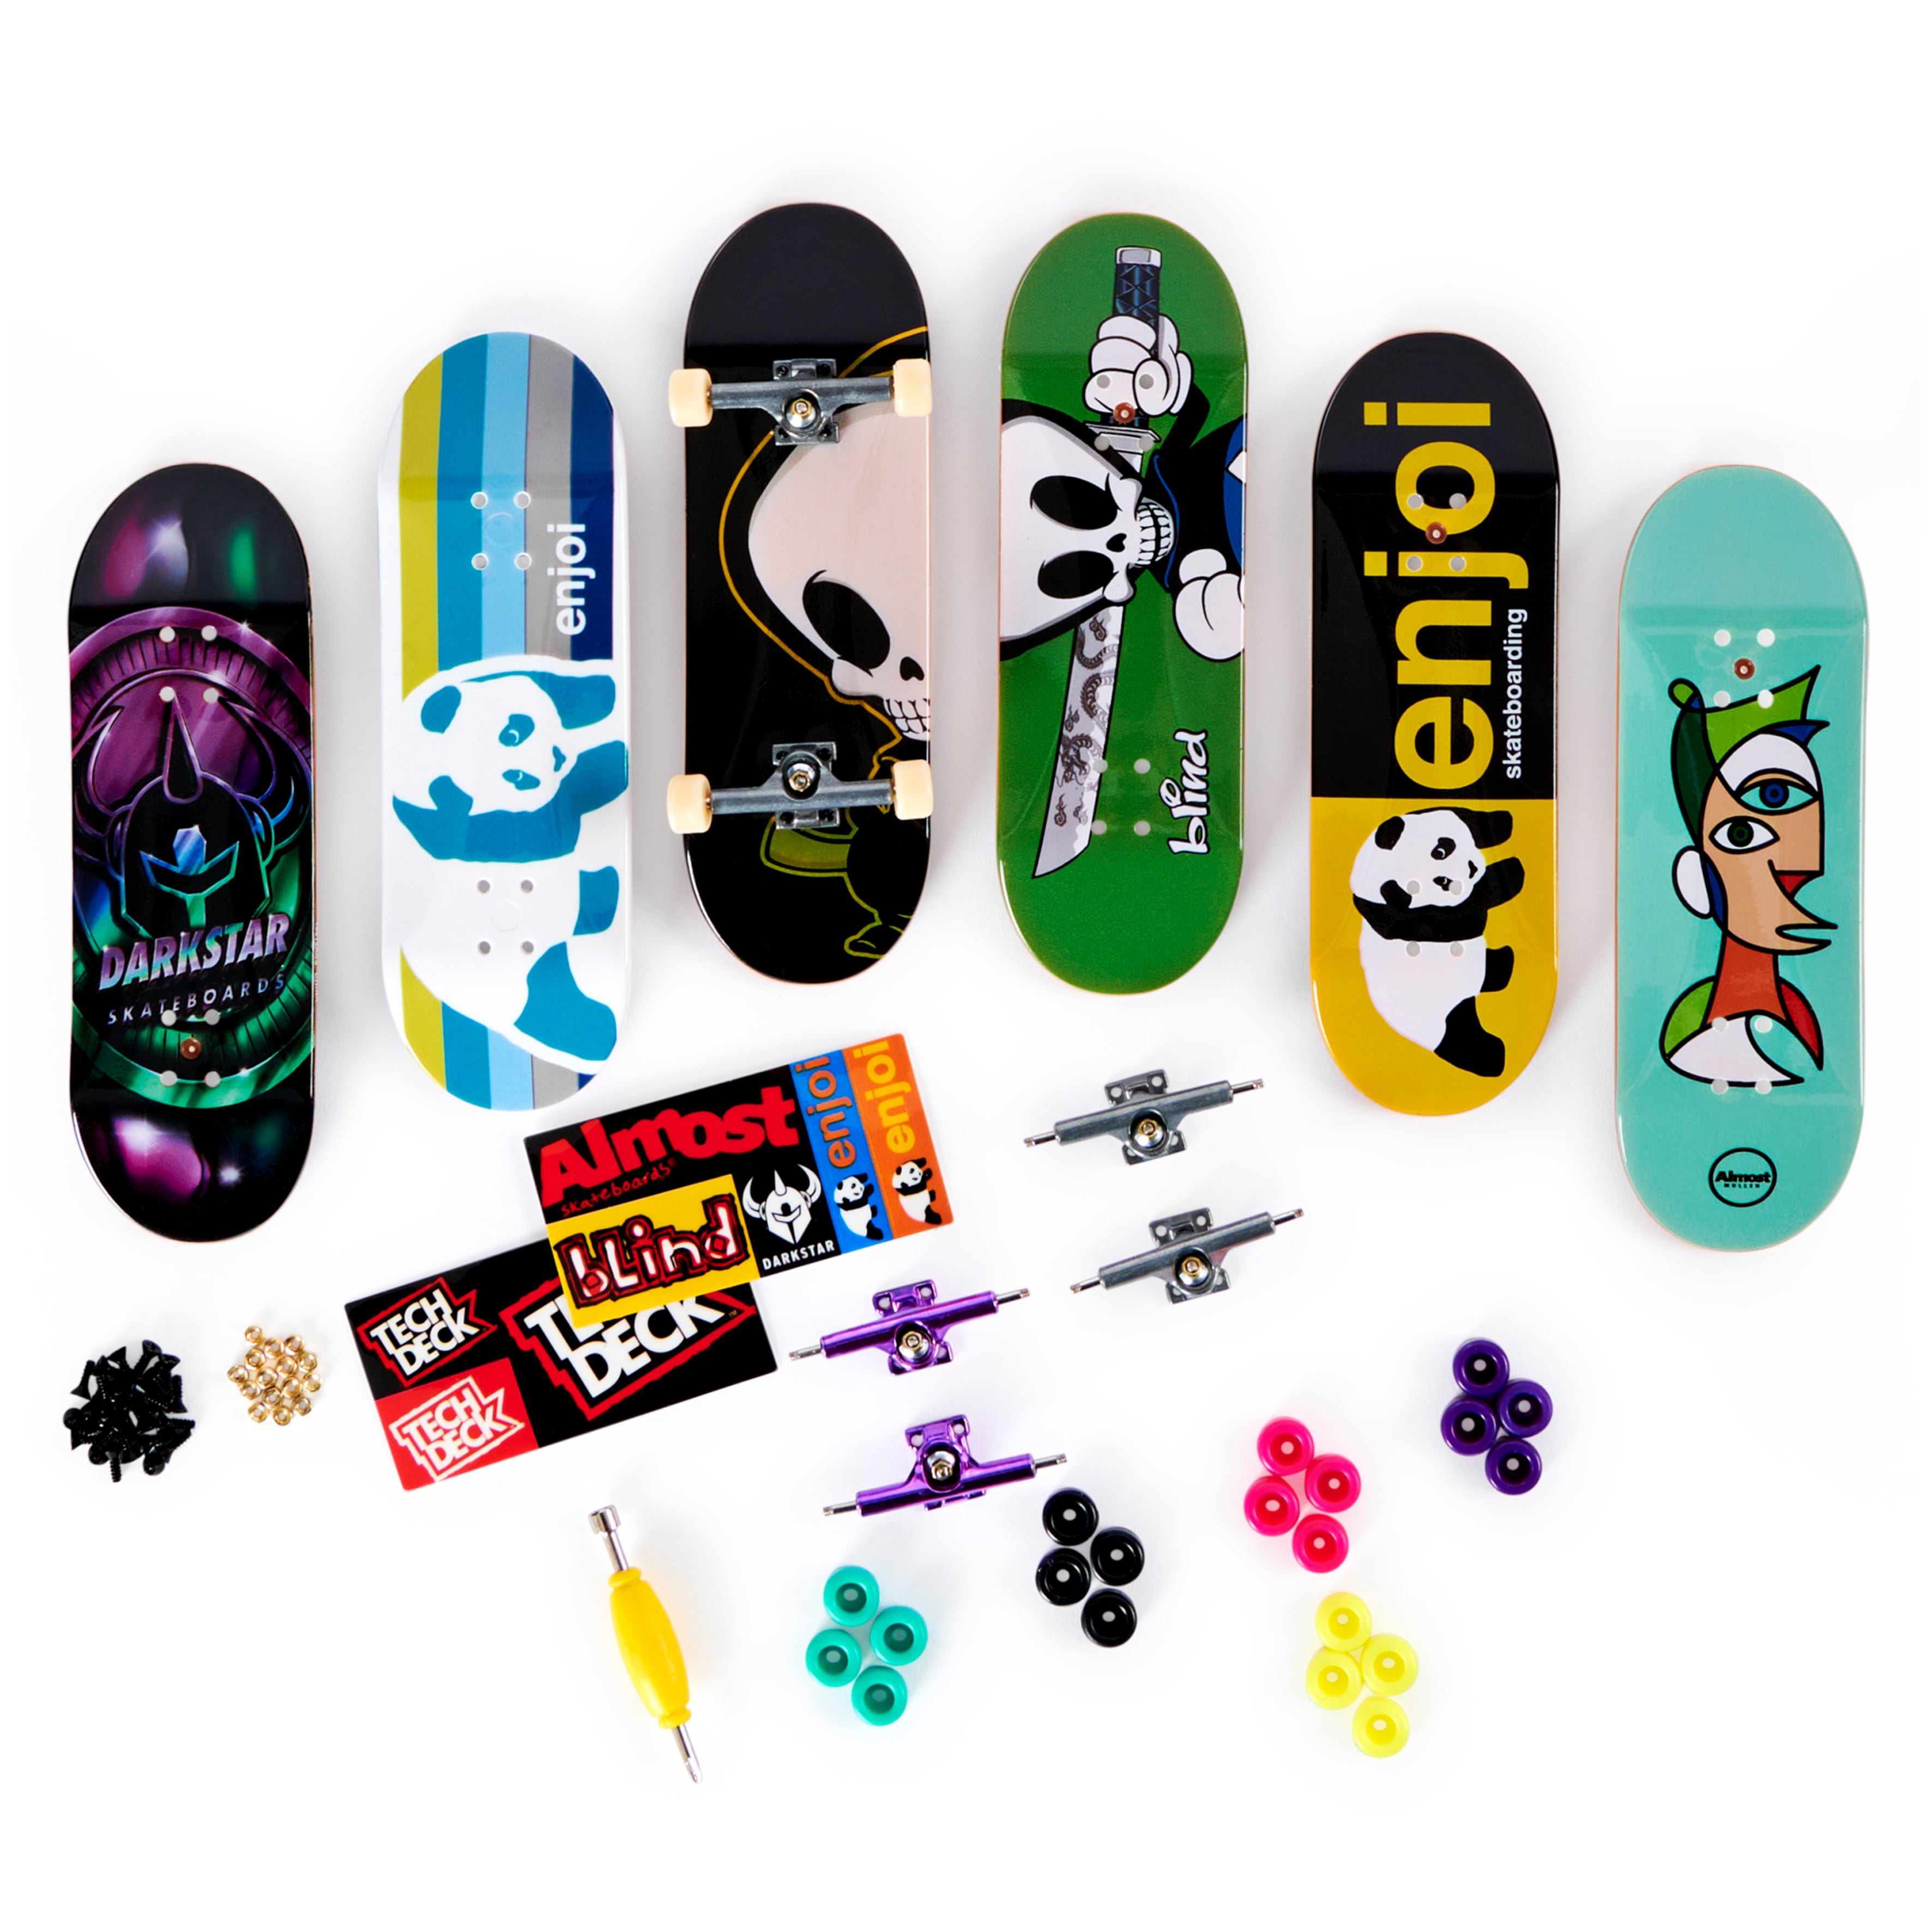 20th Anniversary Tech Deck Darkstar Skateboards Sk8shop Bonus Pack with 6 Fingerboards 